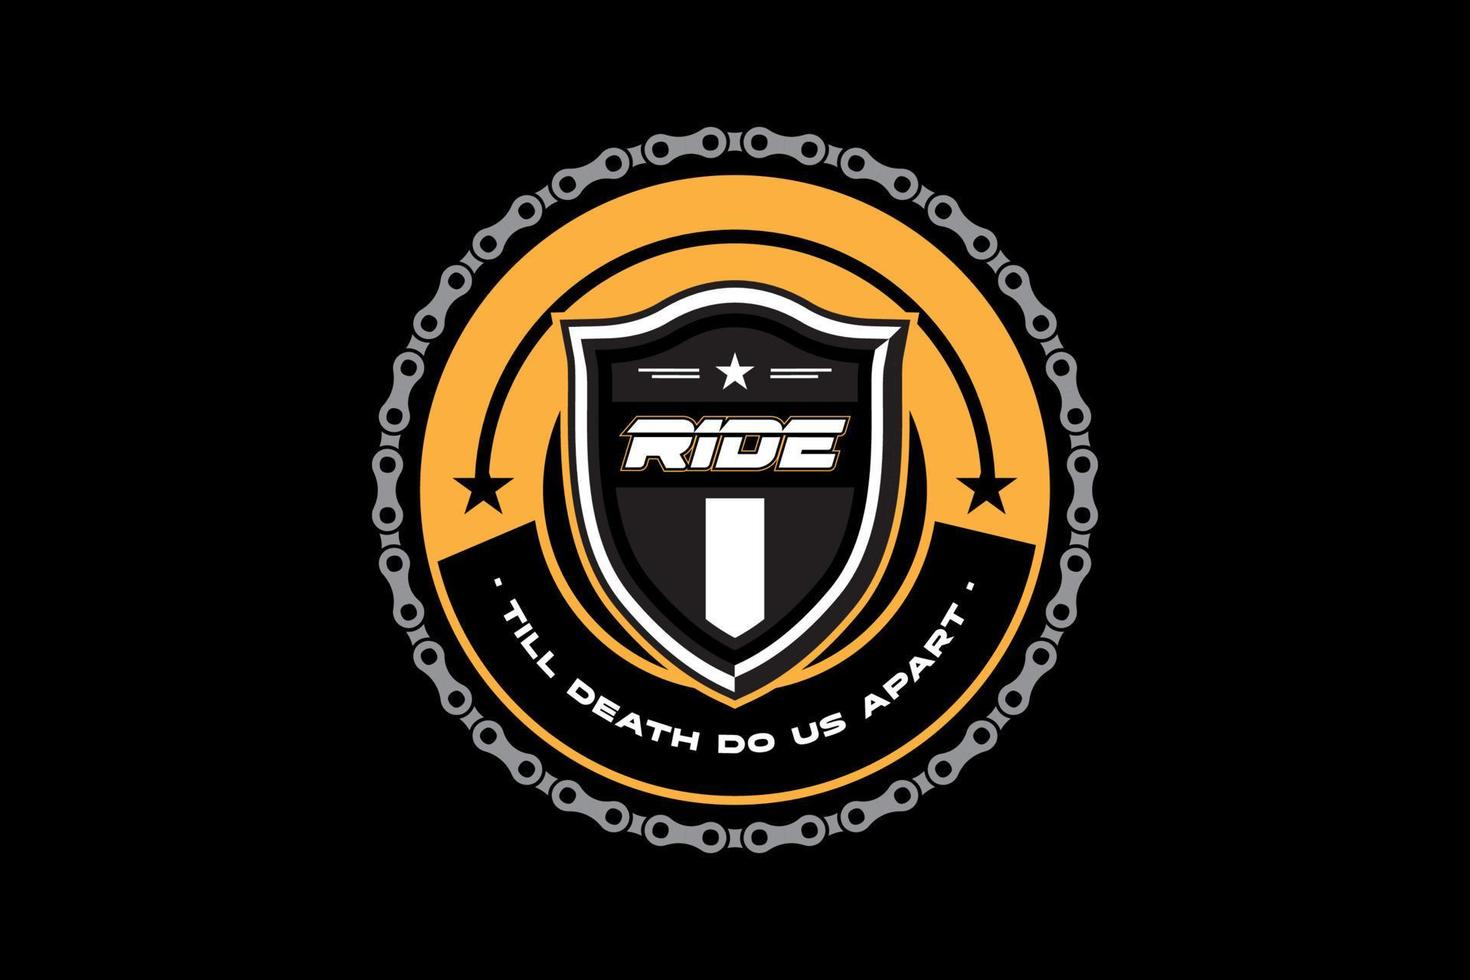 vintage rider logo badge met fietsketting retro stijl logo afbeelding vector